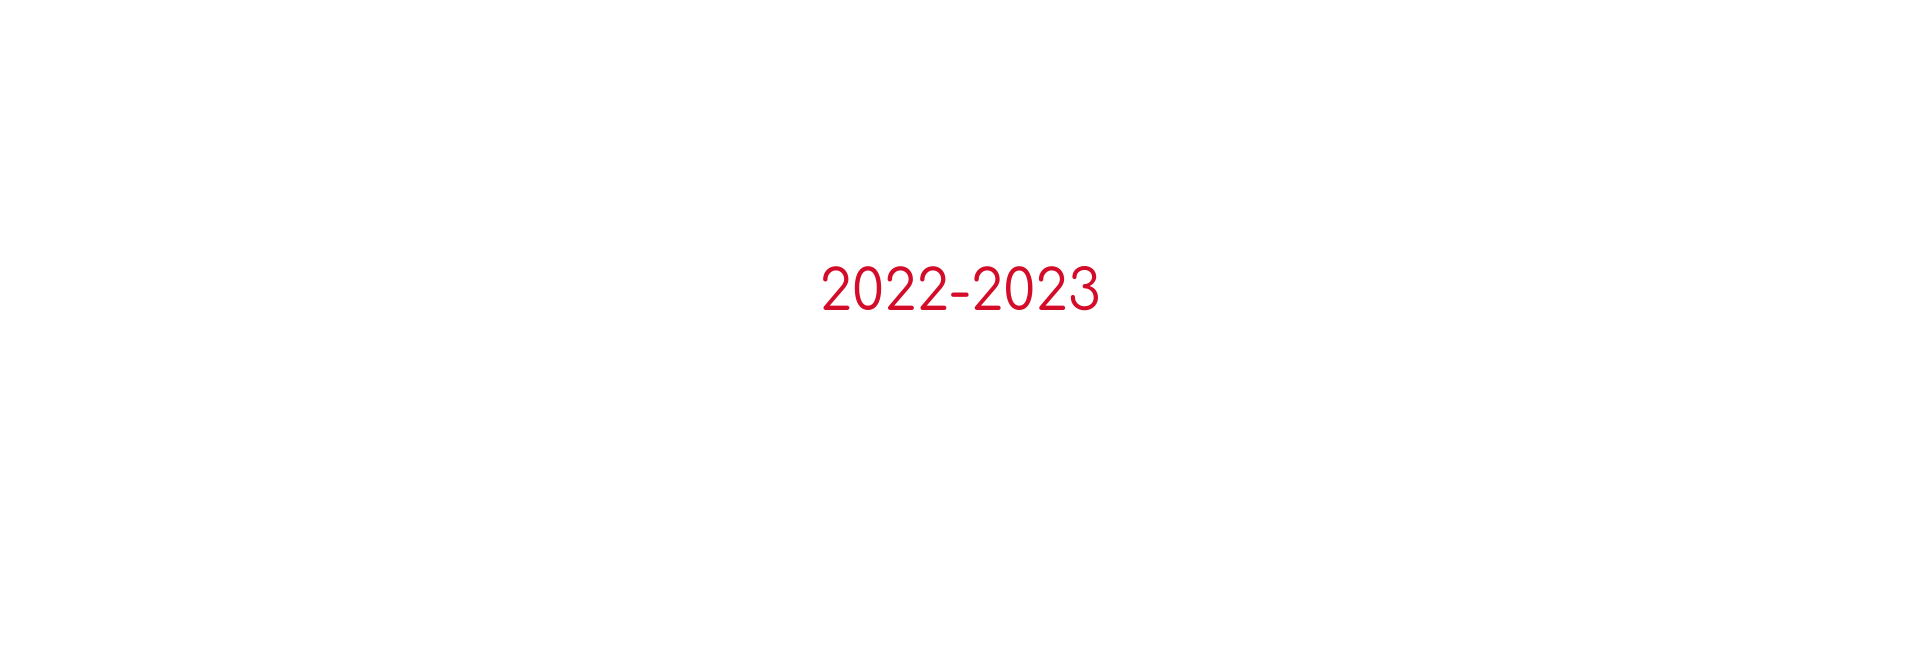 2022-2023 Locations (1)